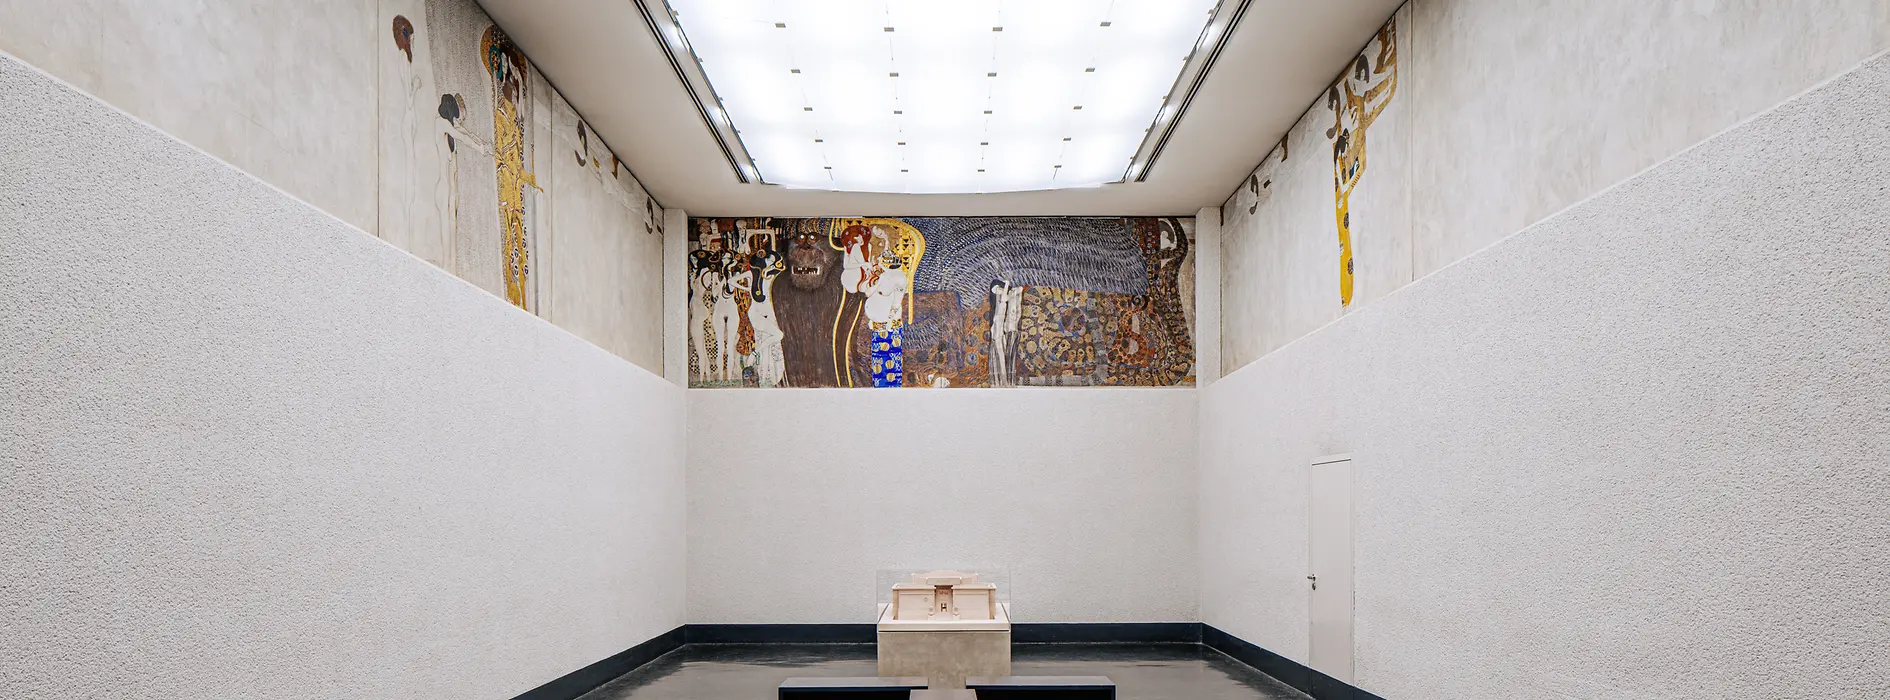 Beethoven Frieze by Gustav Klimt 